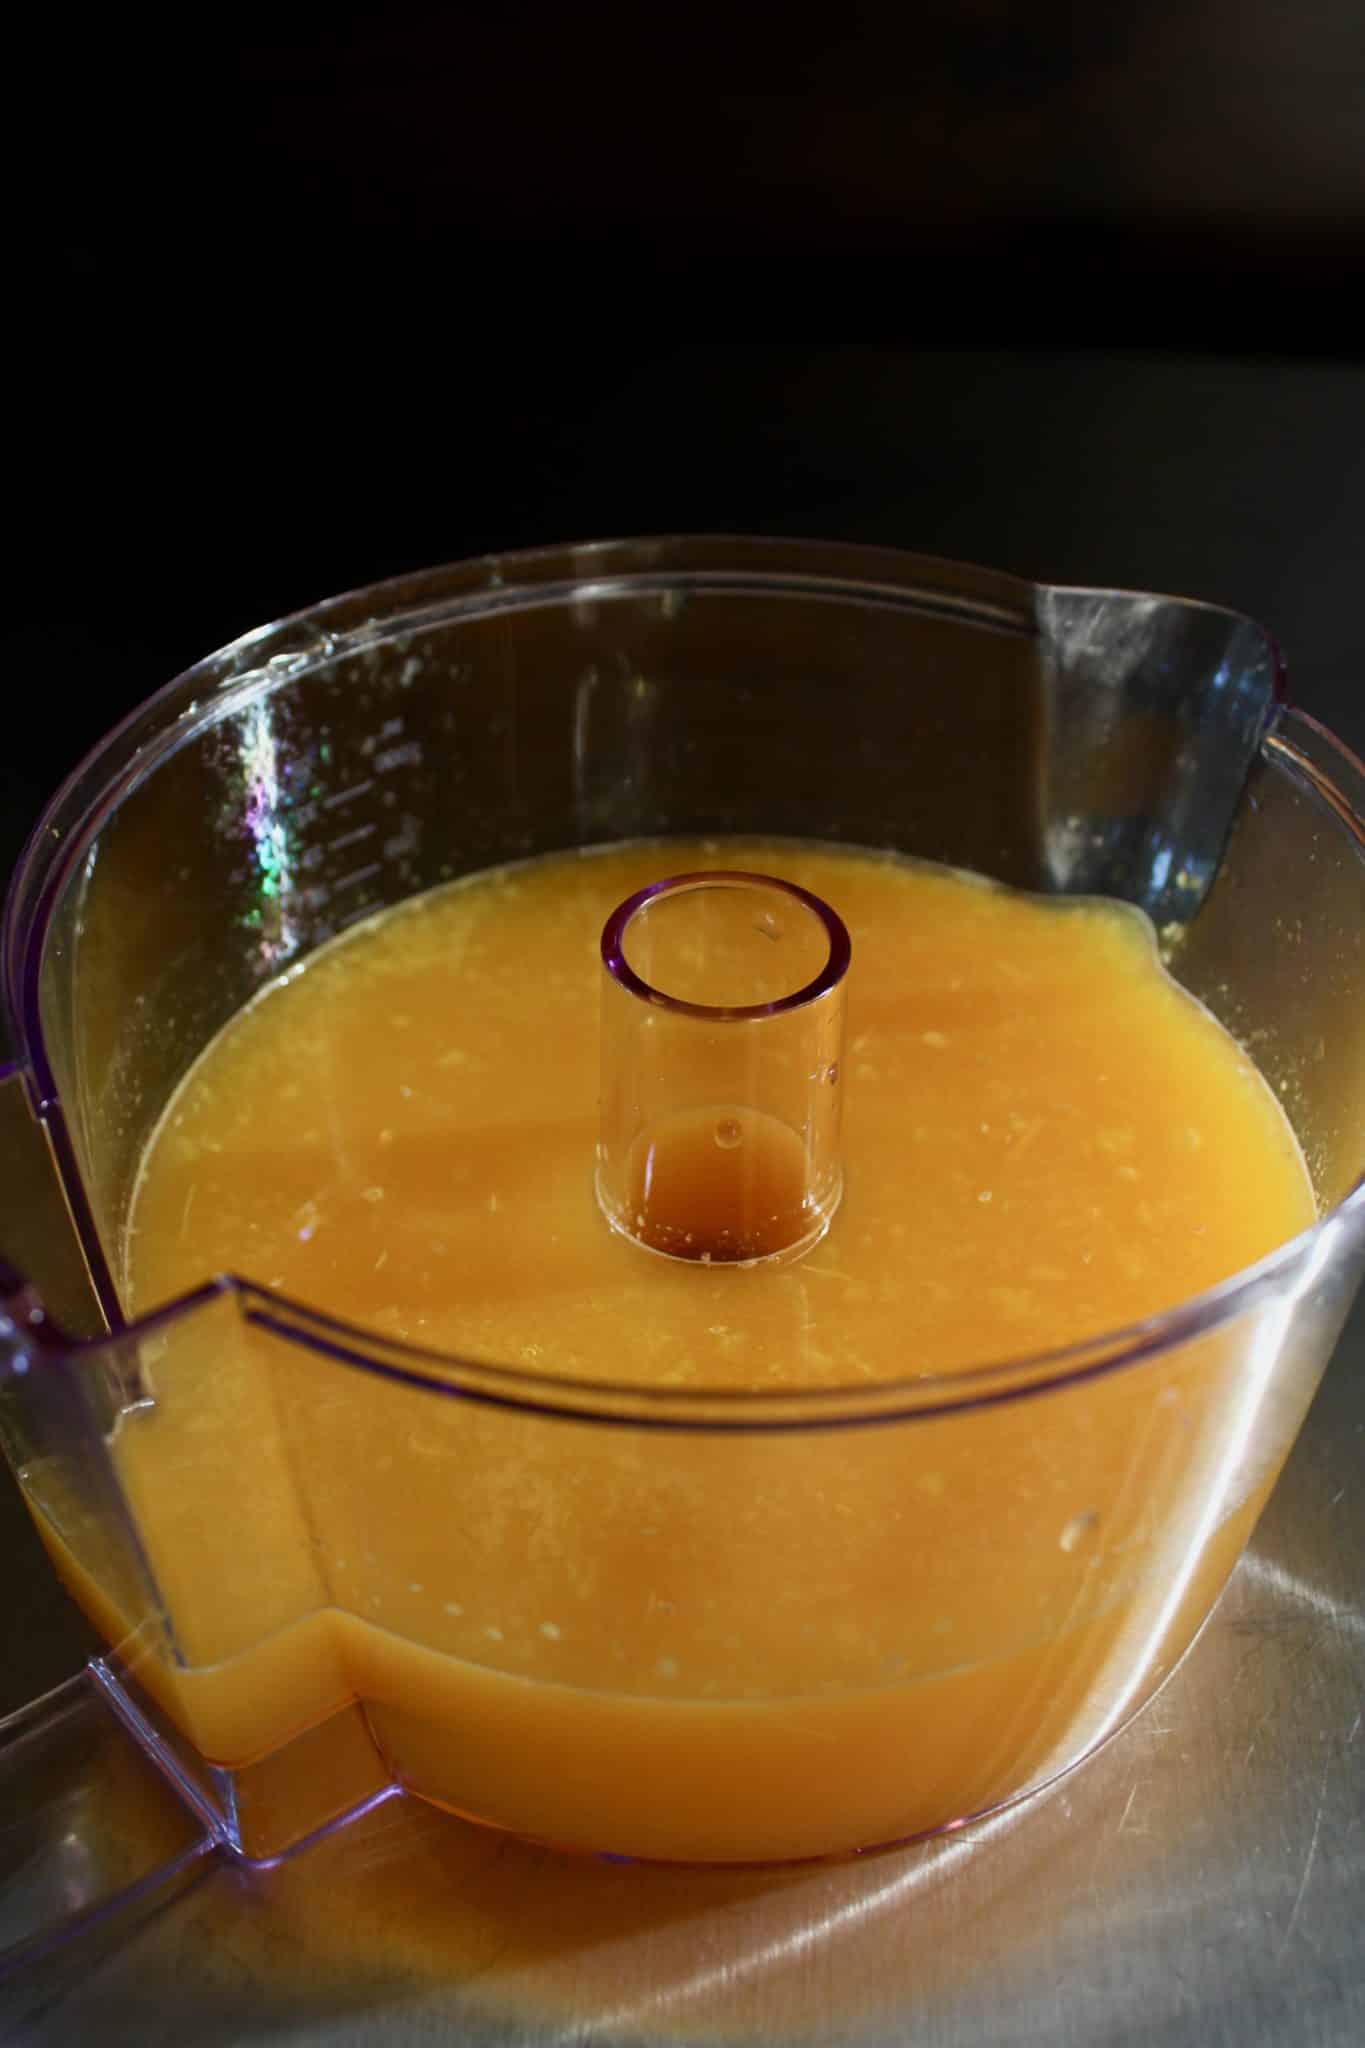 freshly squeezed orange juice in a juicer.